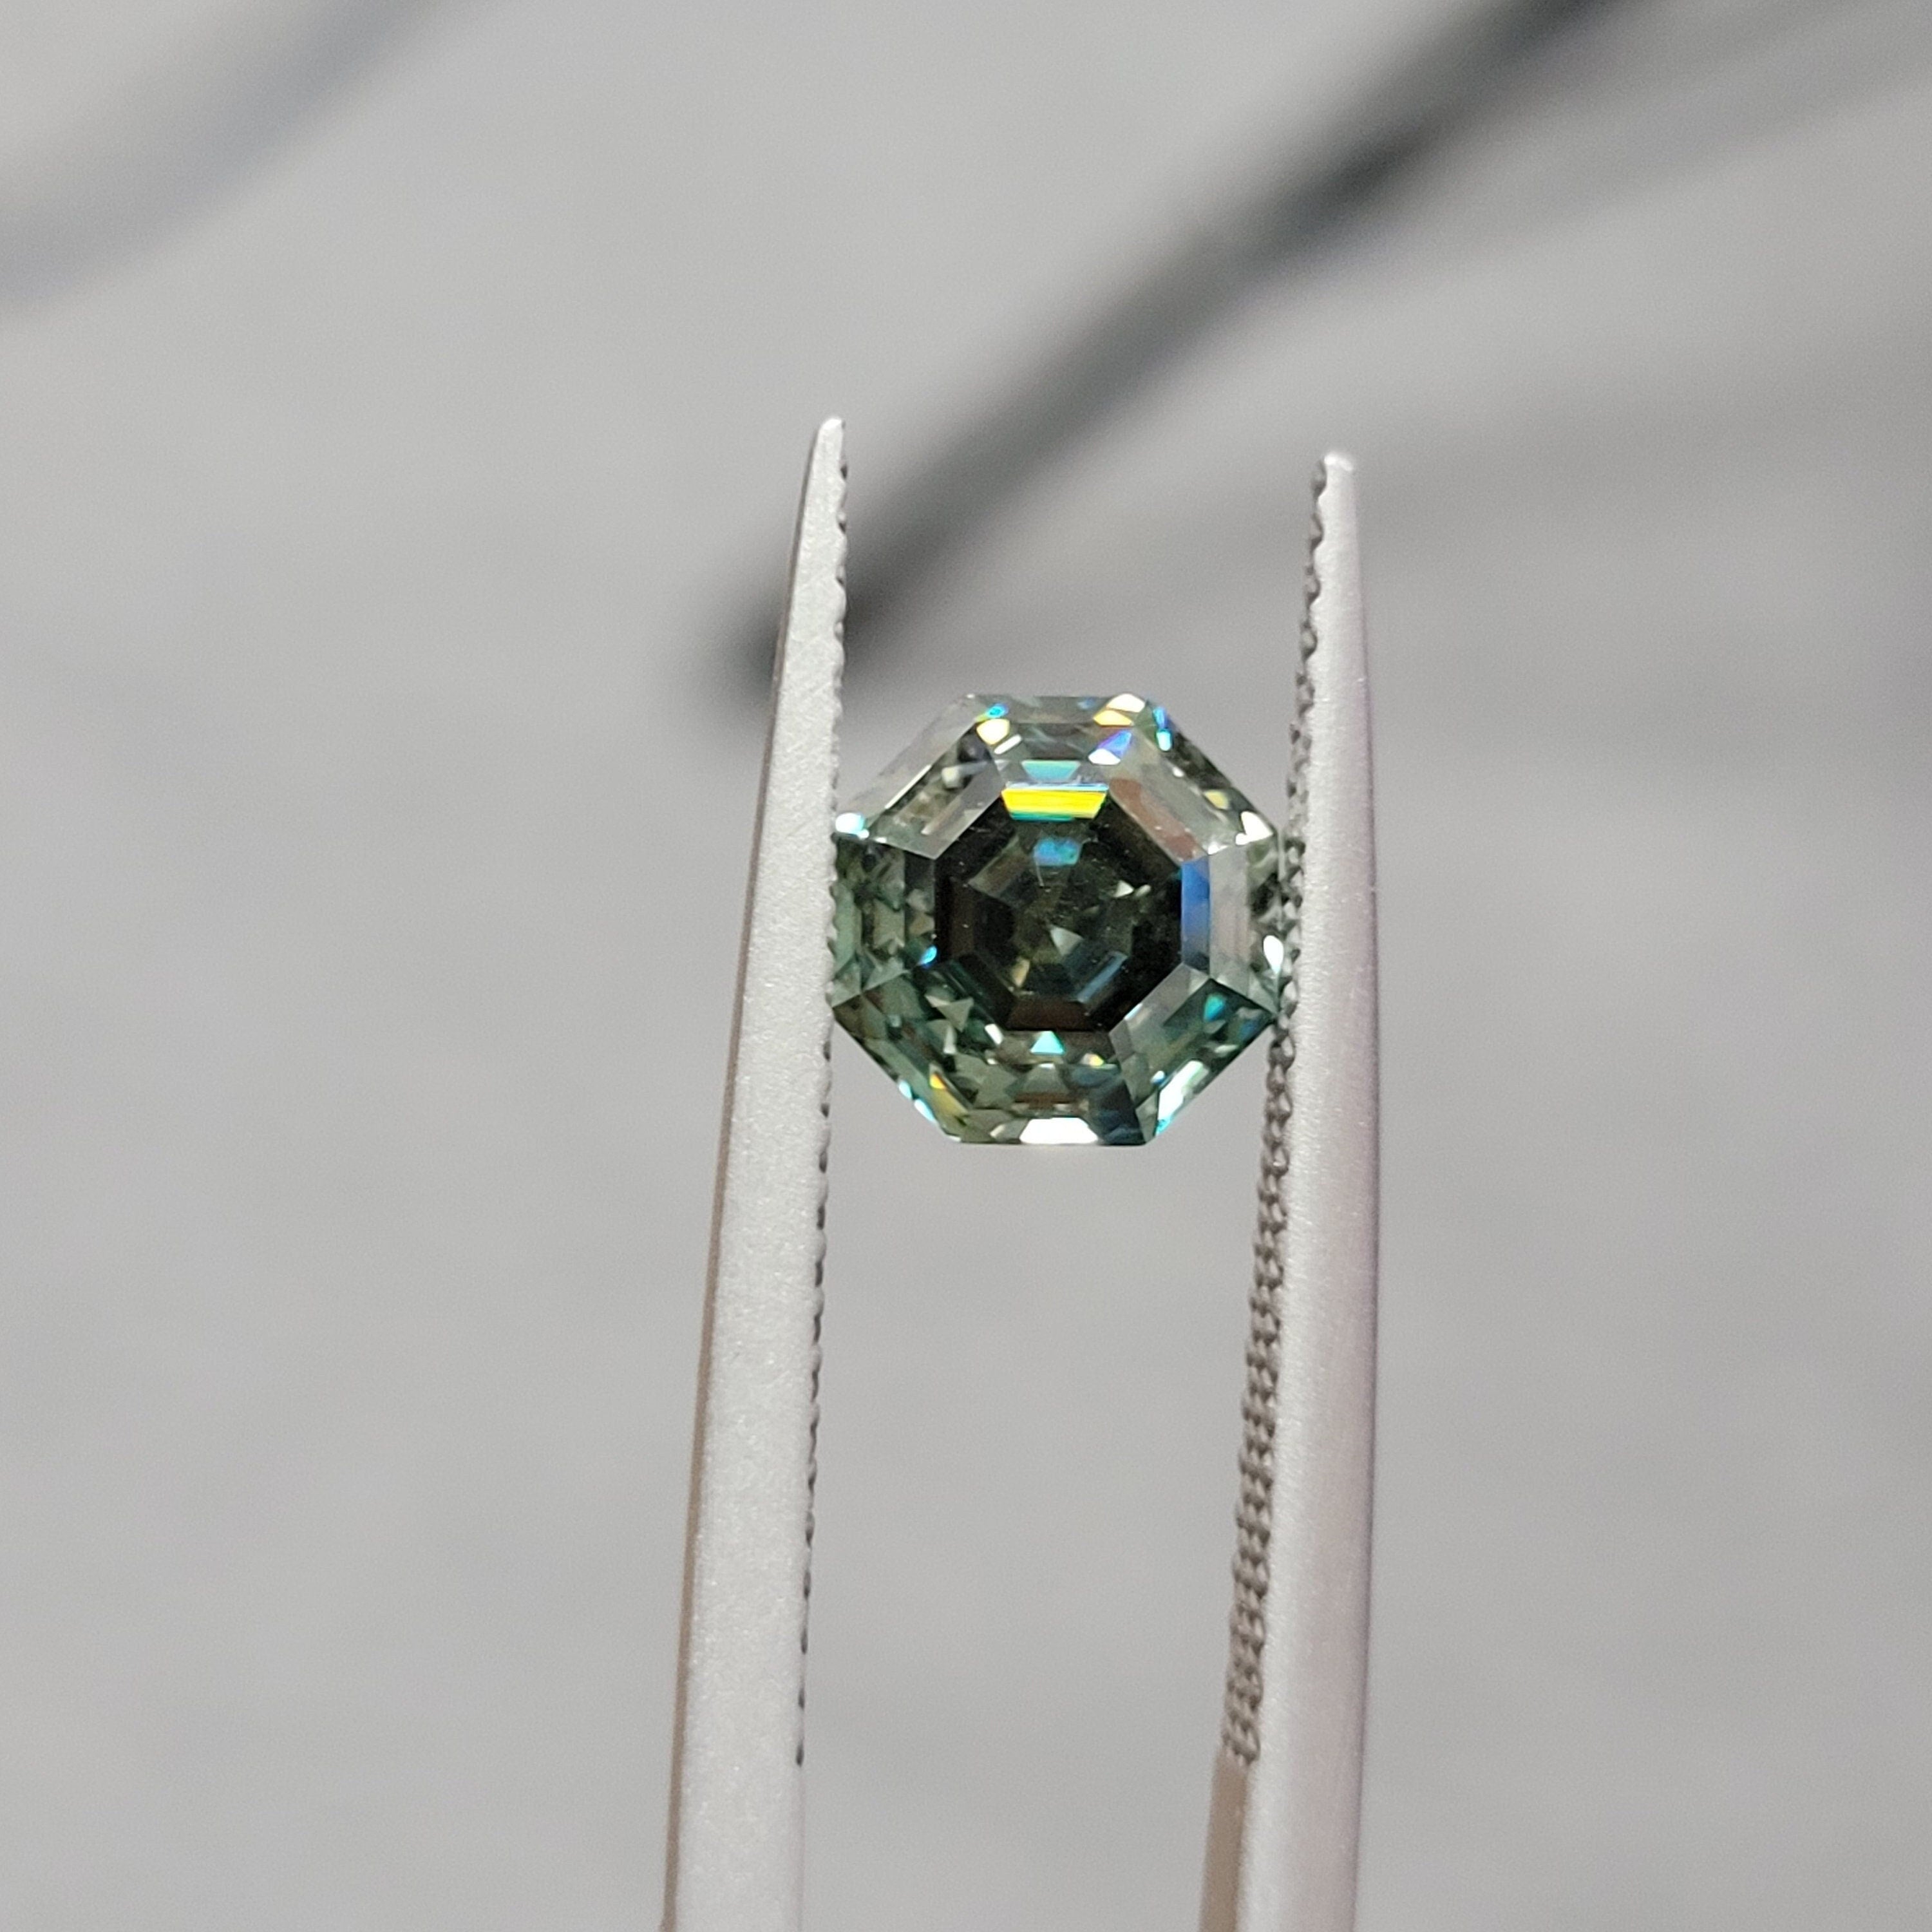 7mm 2ct loose moissanite certified vvs1 turquoise octagon cut gra laboratory gemstone